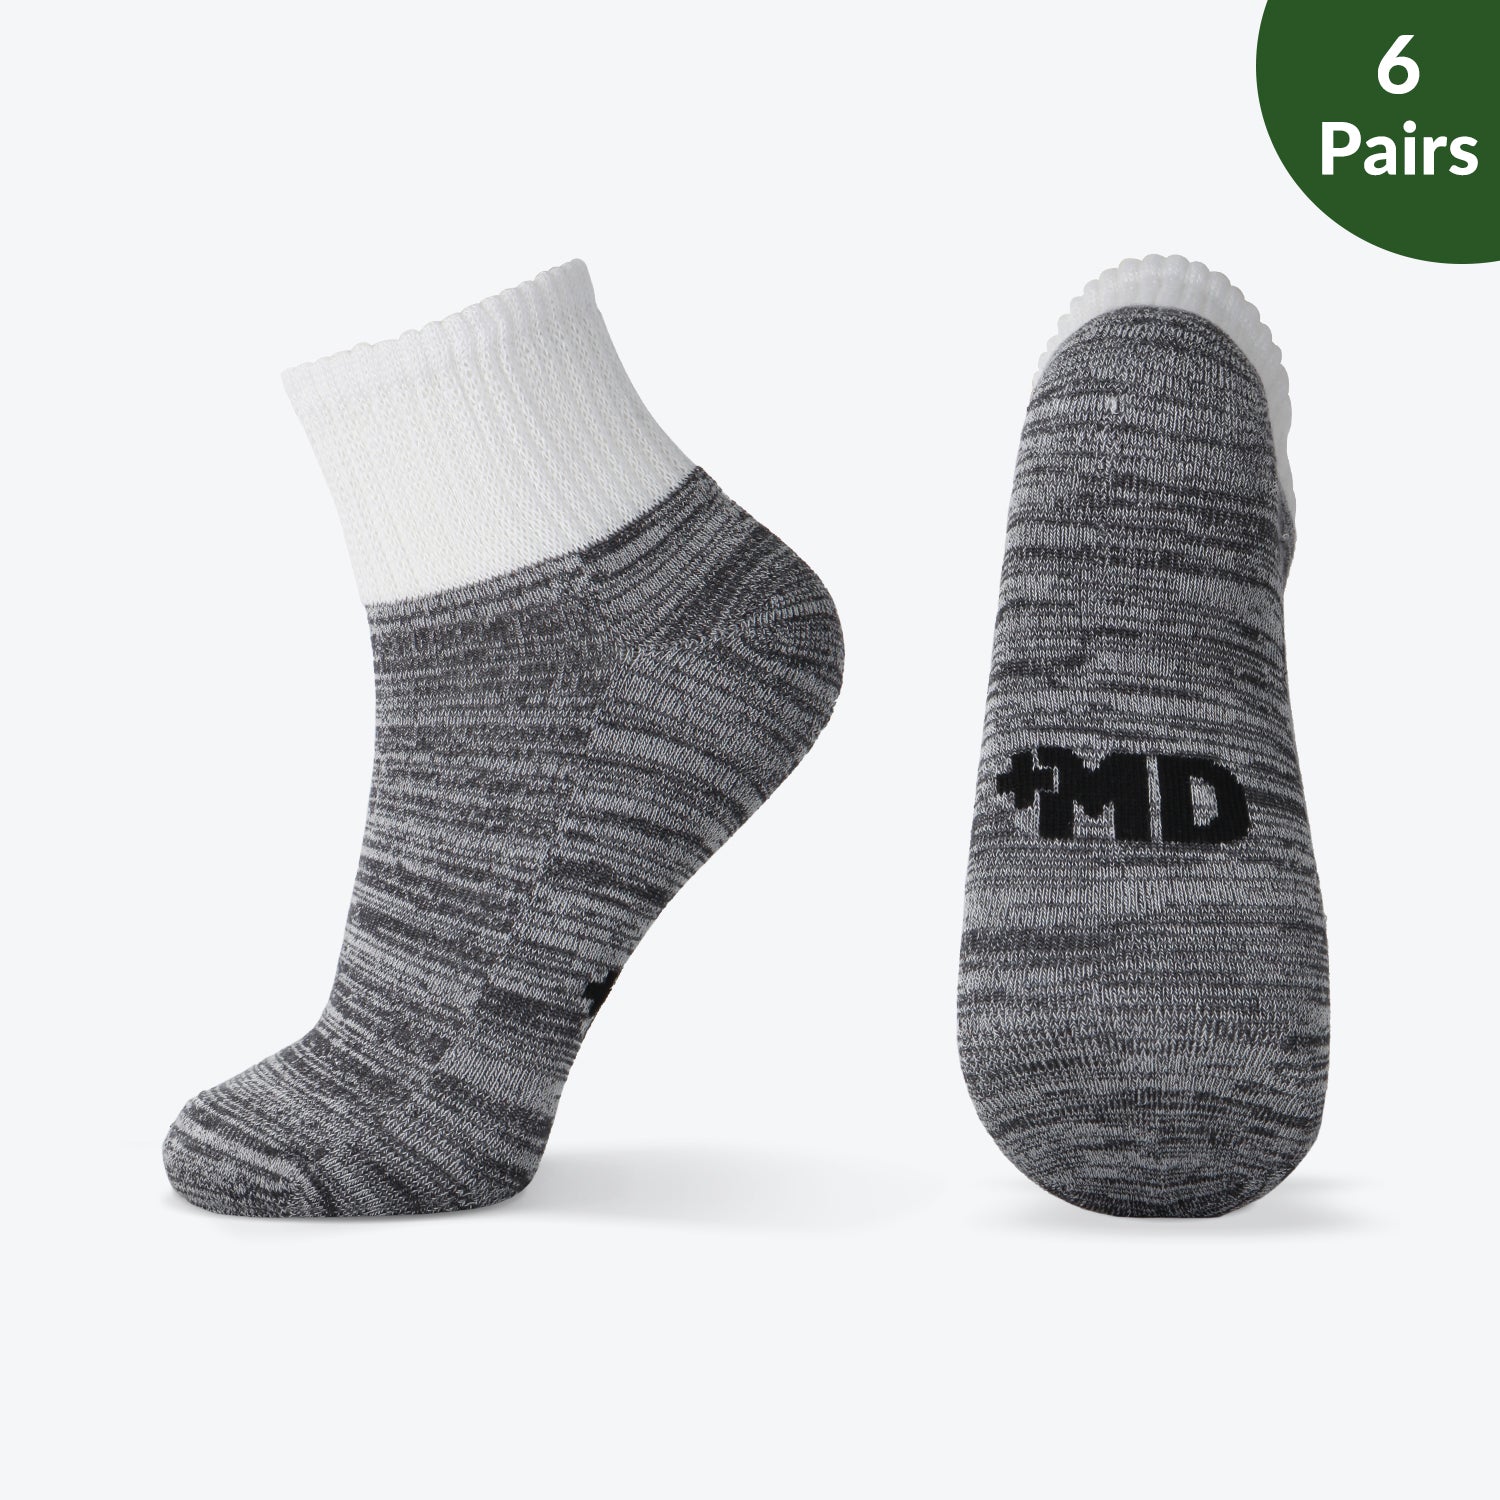 Diabetic Bamboo Socks Keep feet odor-free, 6 Paris